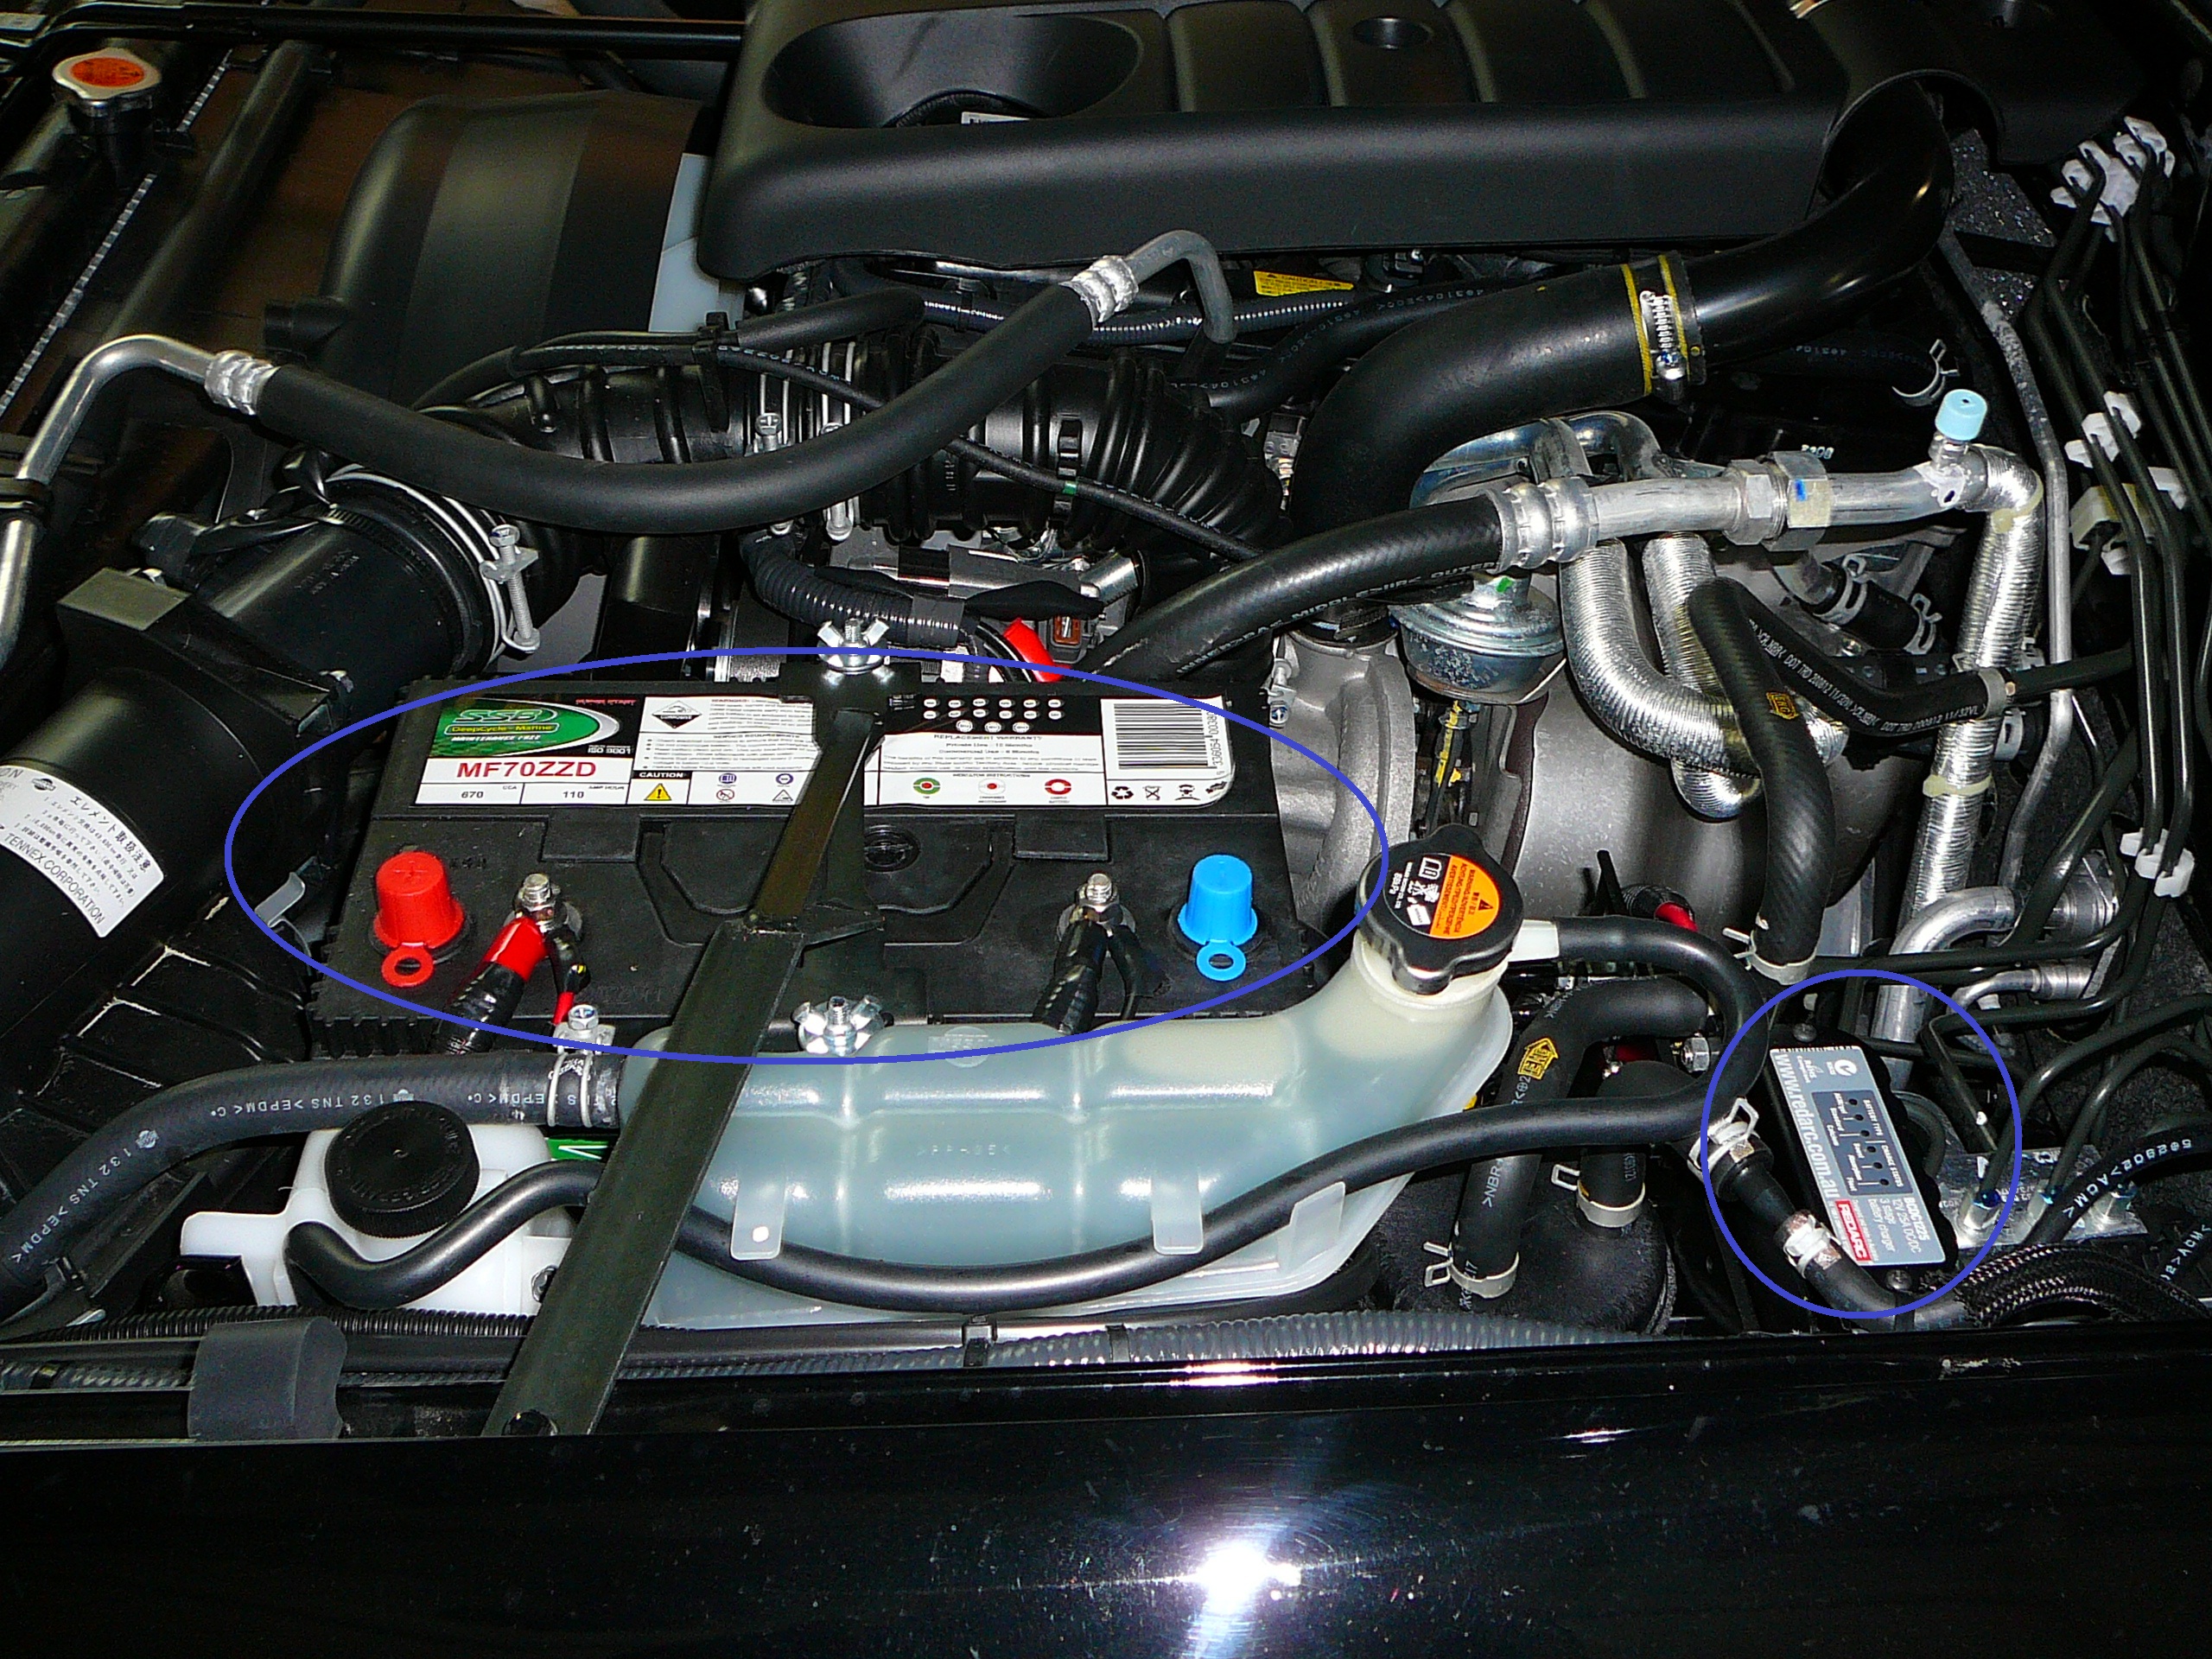 Nissan Patrol 2013, Dual Battery System